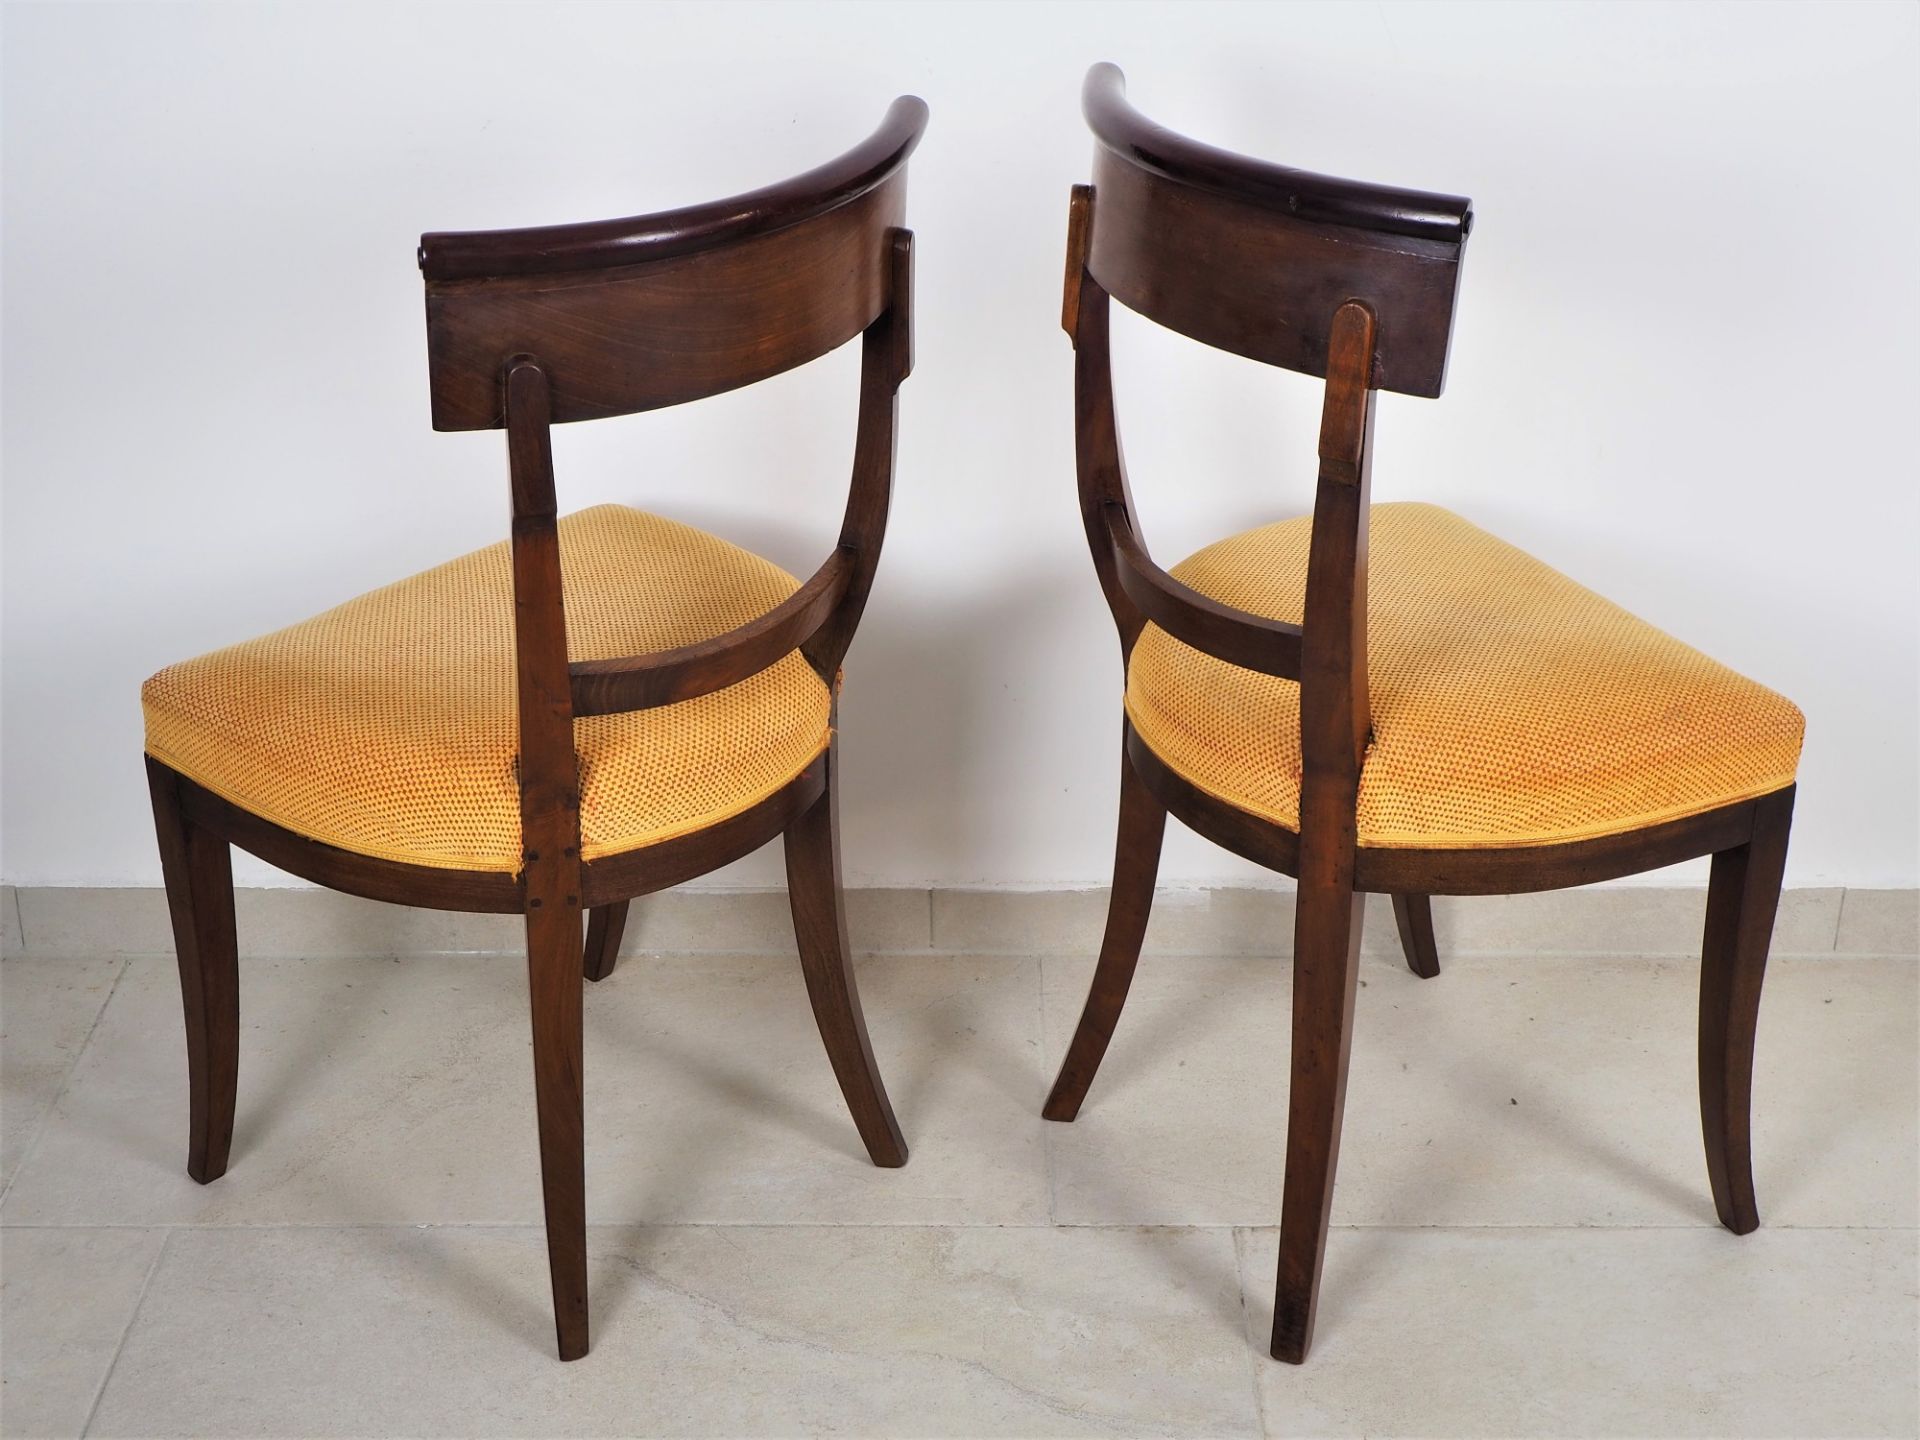 Set of 6 chairs, Biedermeier, around 1900 - Image 3 of 3